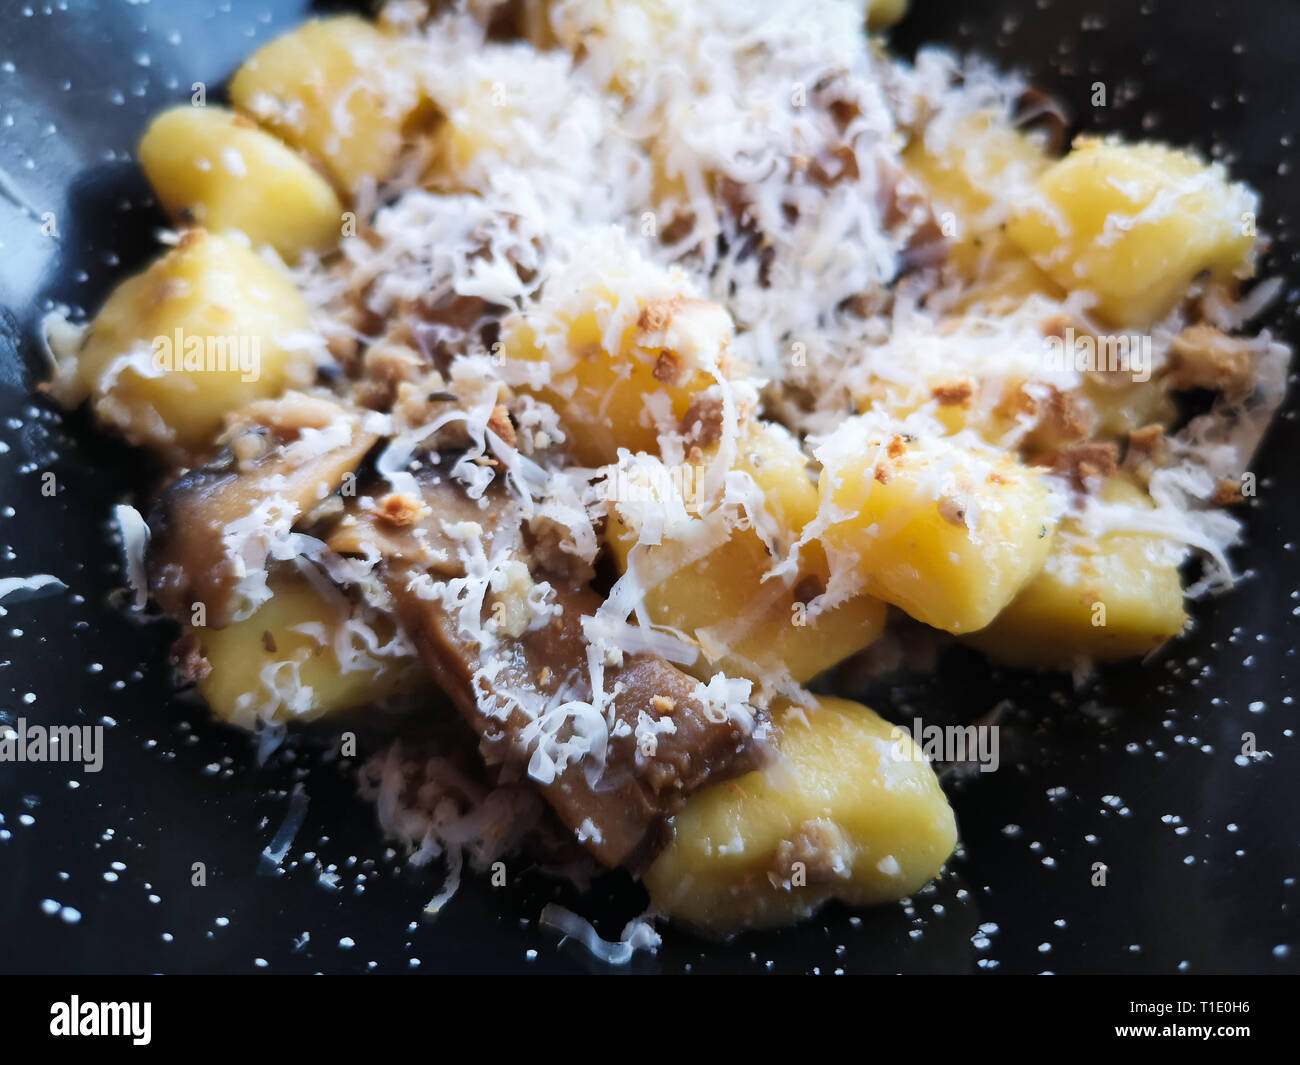 Gnocchi with mushrooms, truffles and flakes of pecorino cheese. Stock Photo